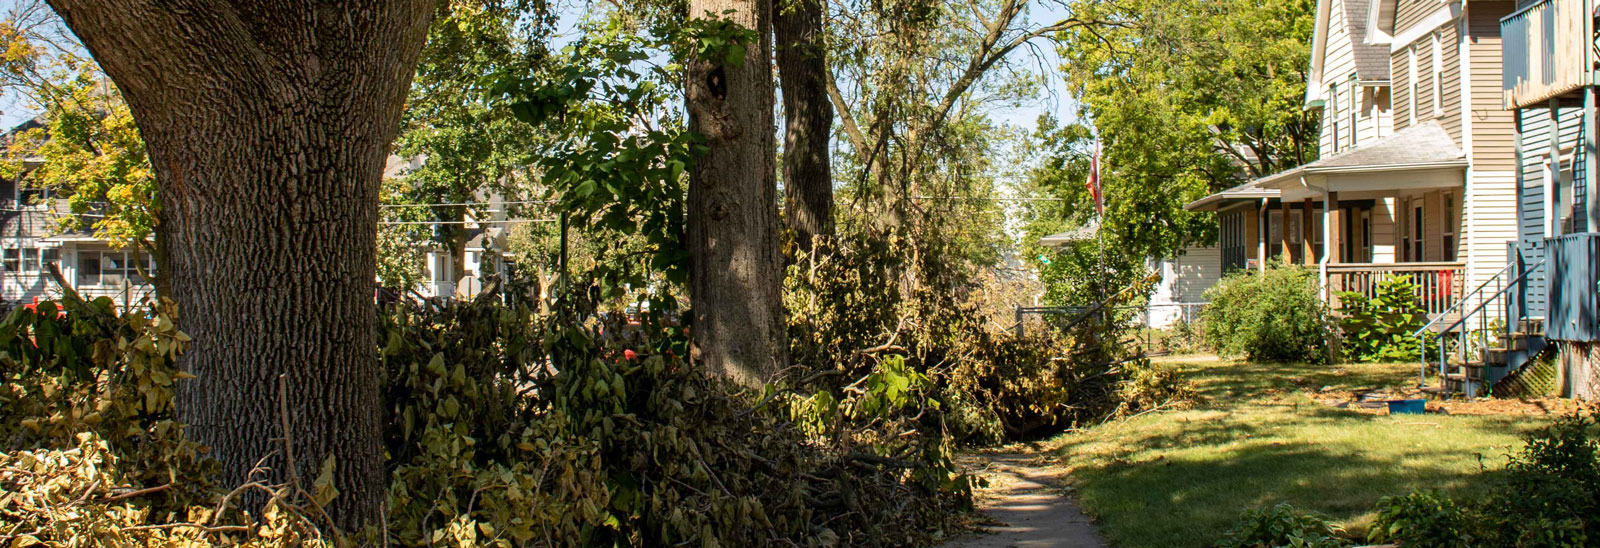 Tree debris awaits collection in neighborhood following August 2020 derecho.